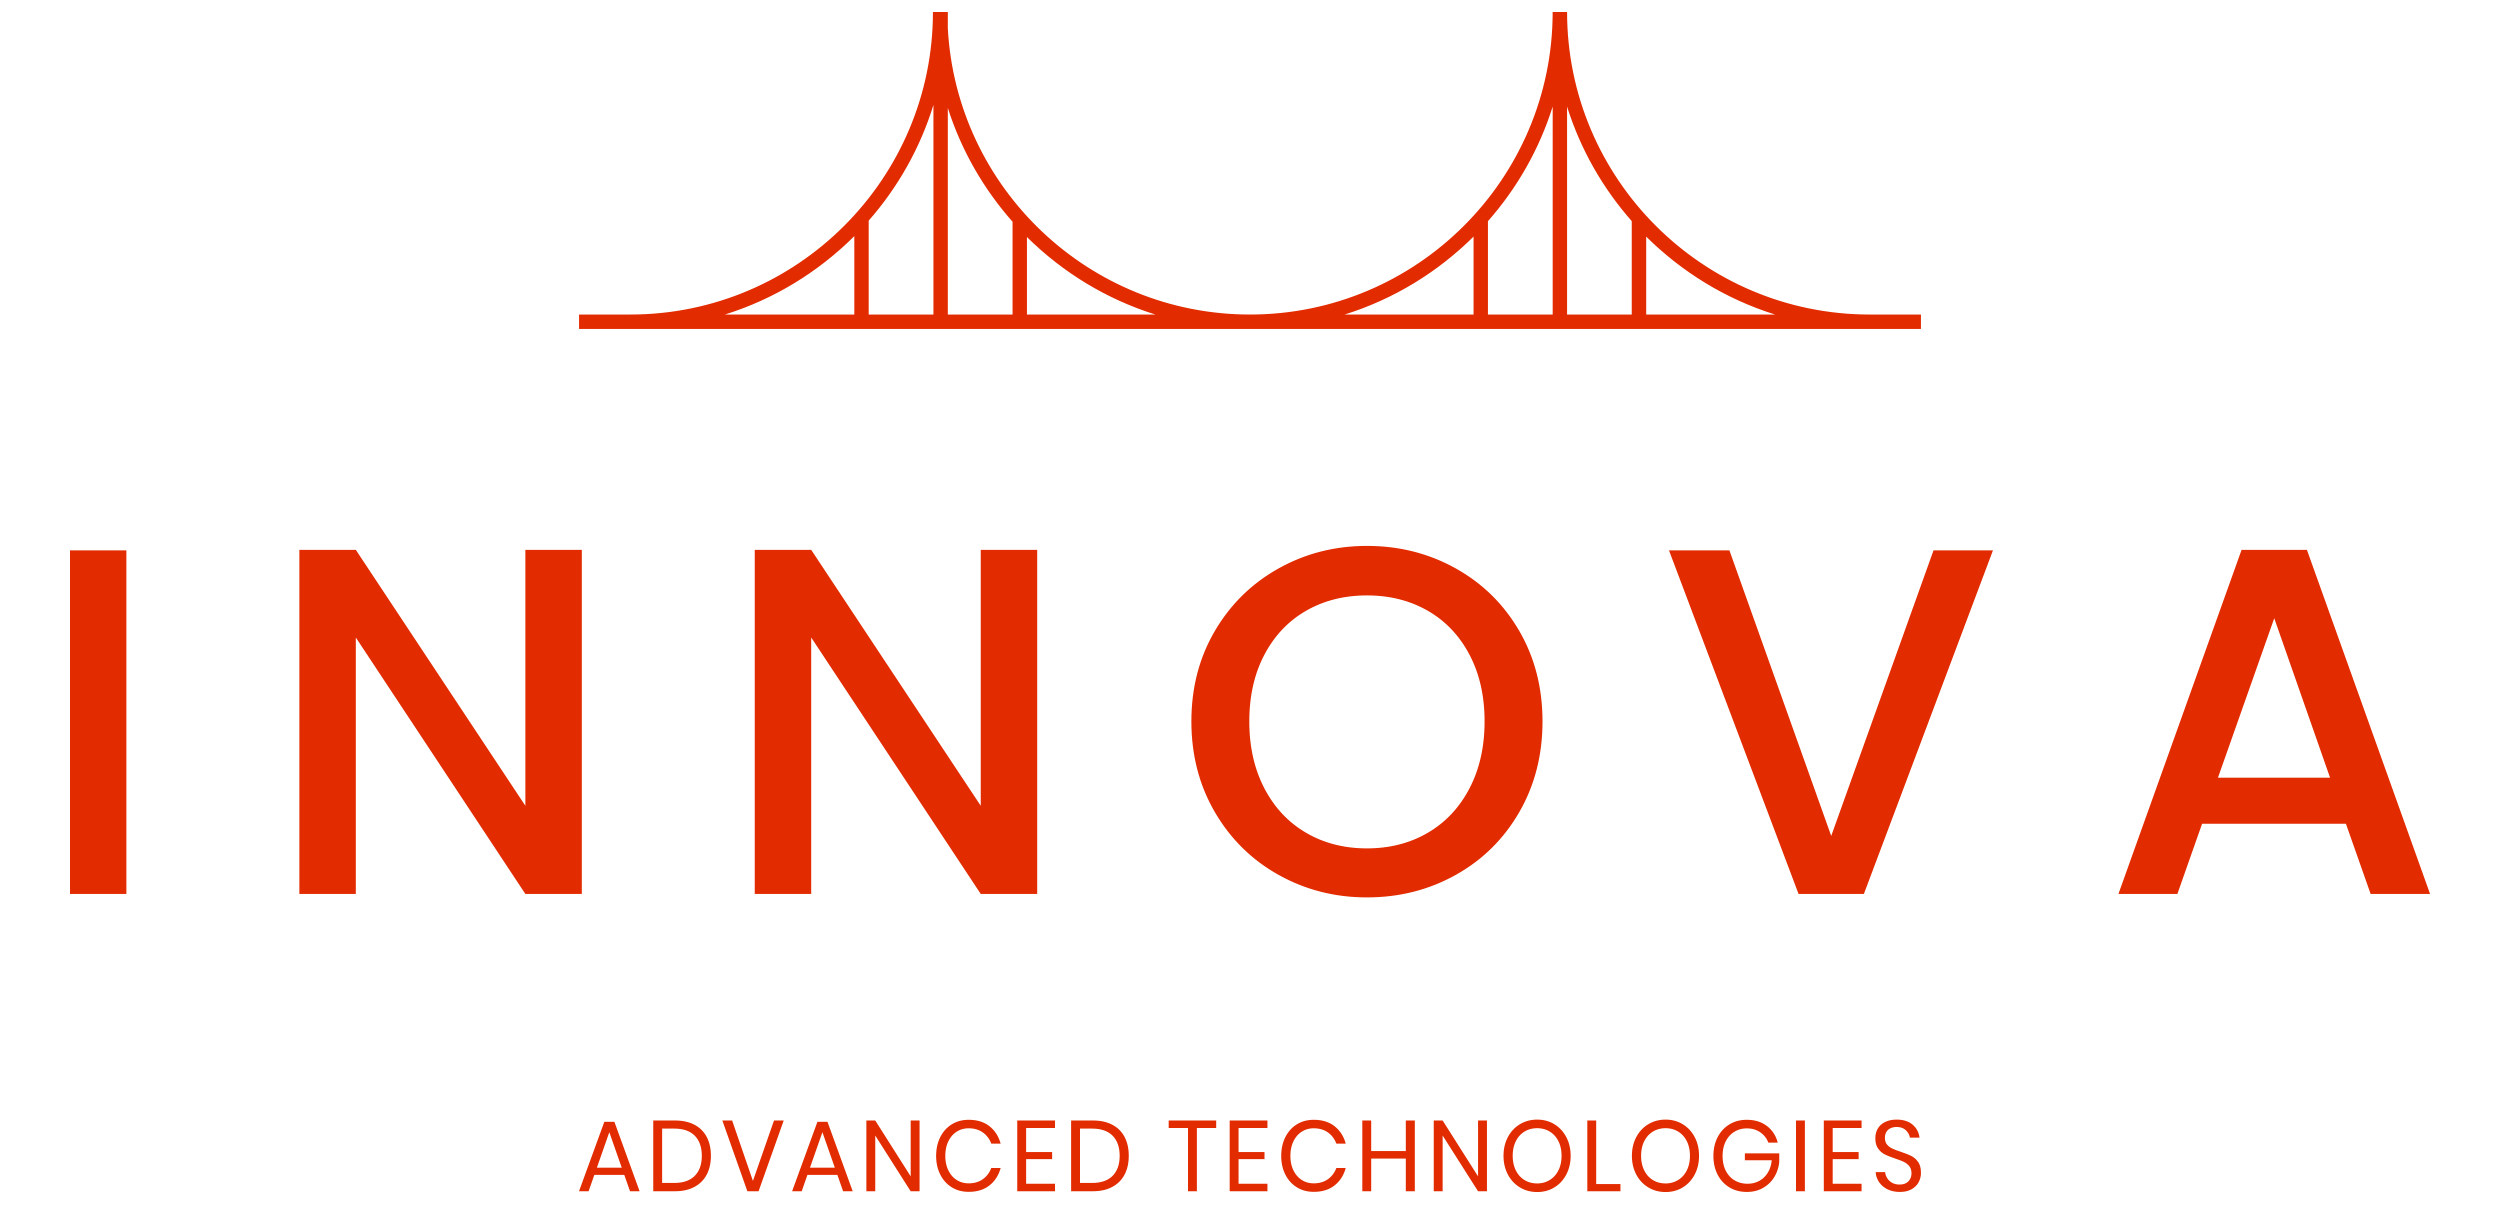 Innova logo png